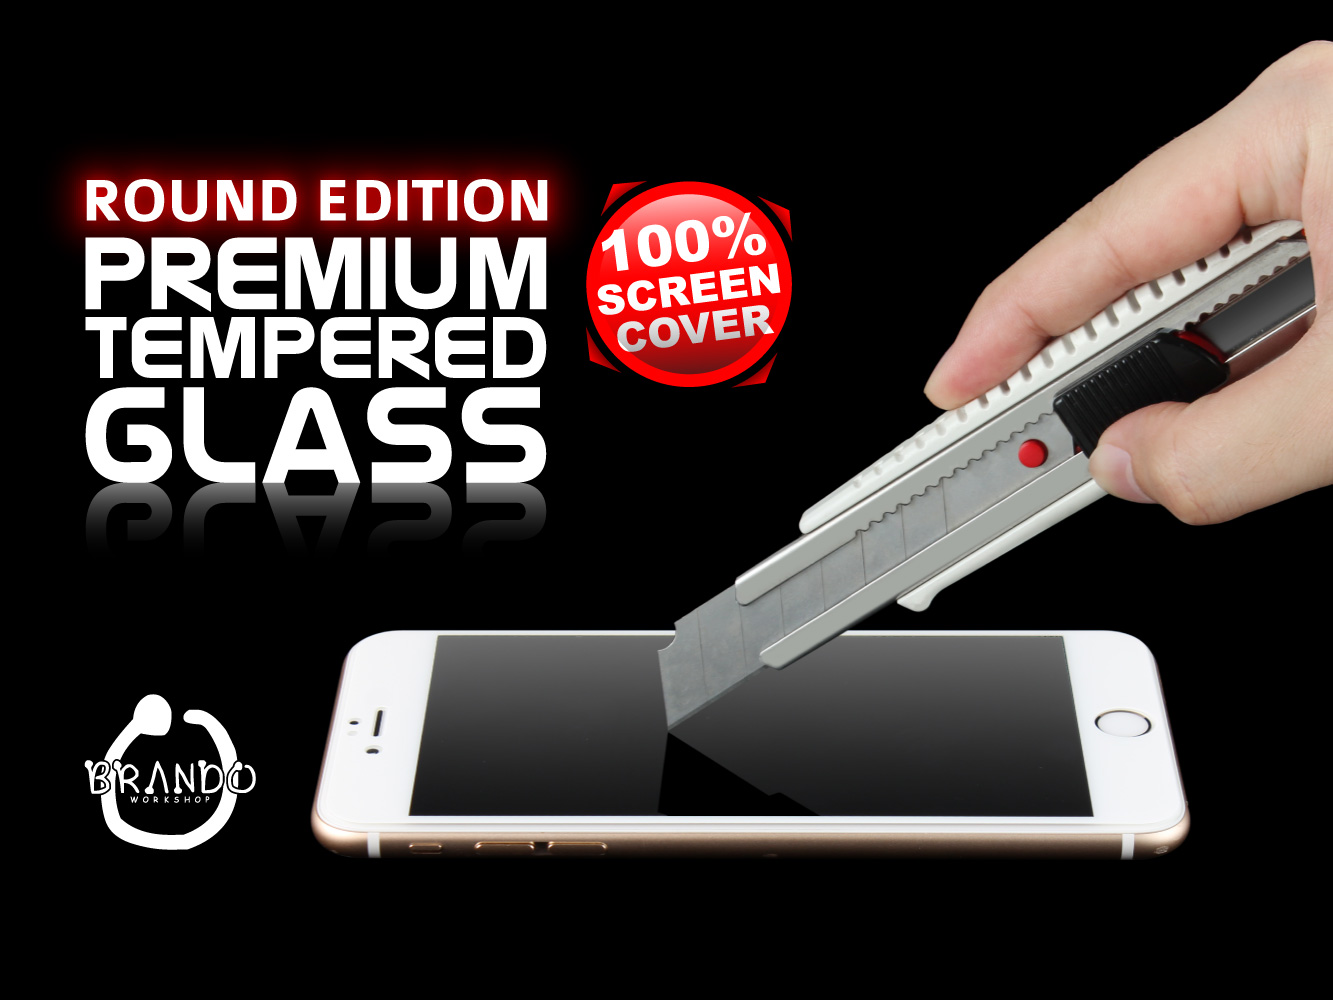 Brando Workshop Full Screen Coverage Glass Protector (Samsung Galaxy Note5) - White